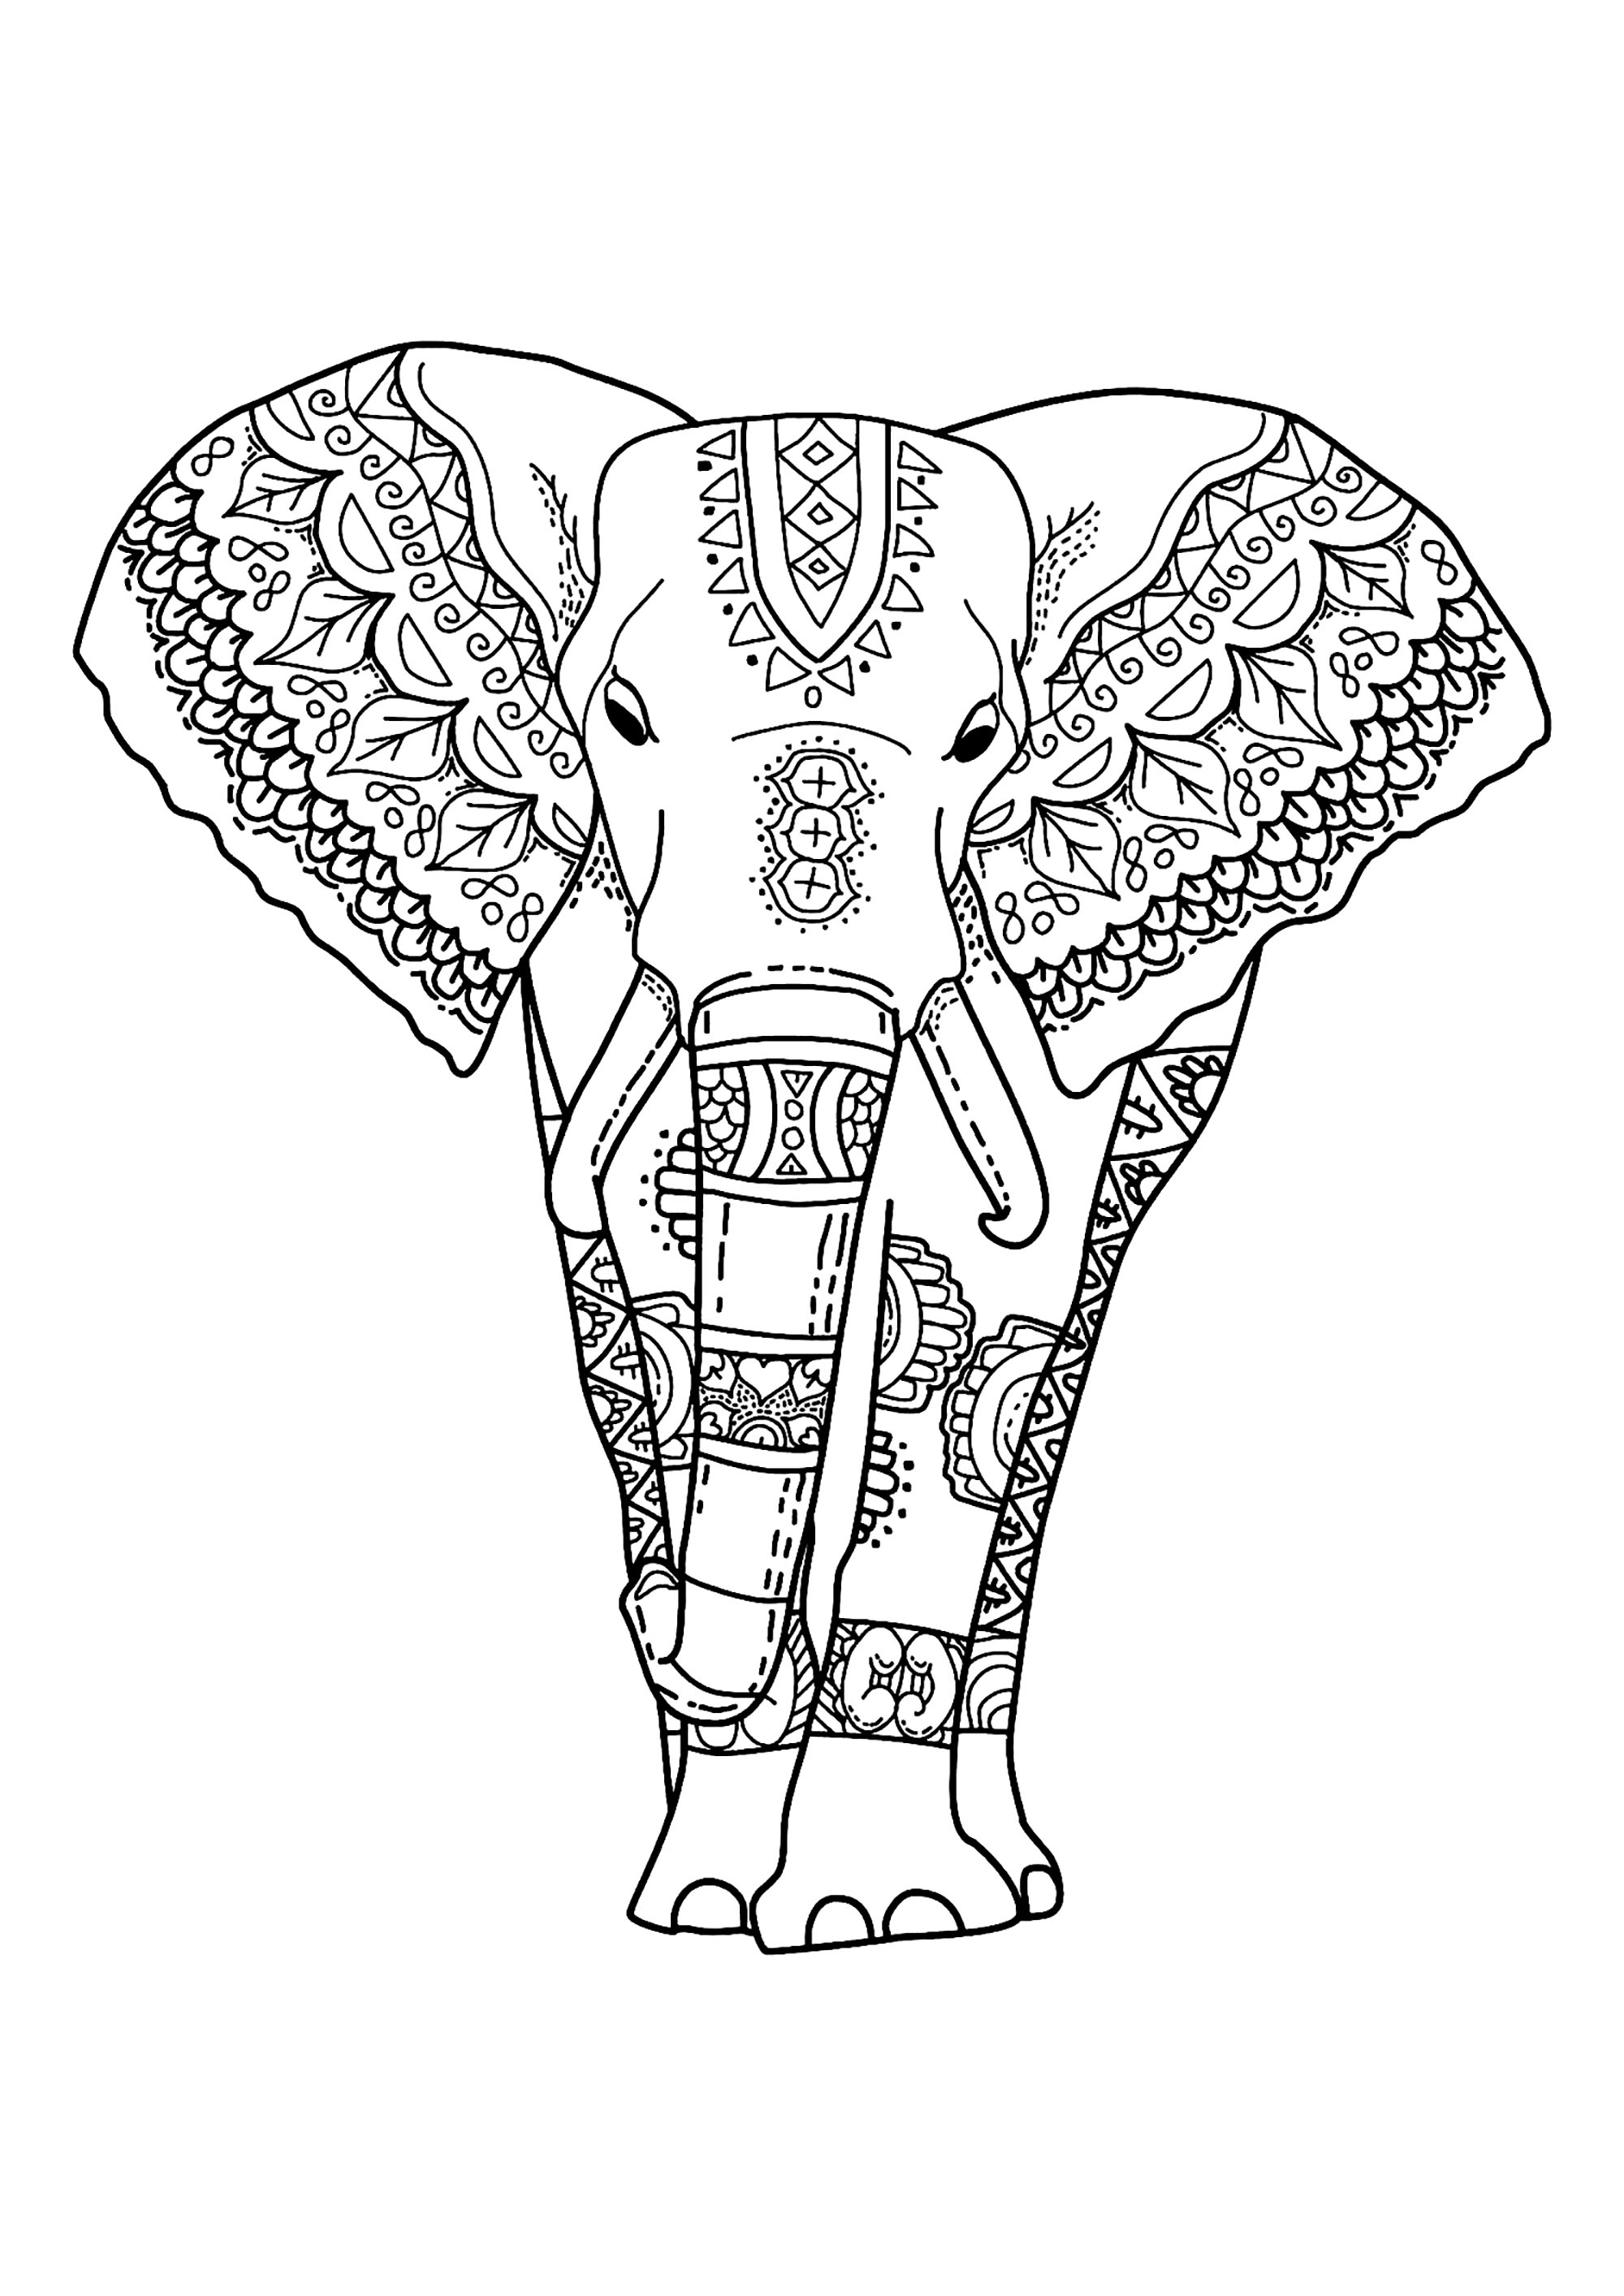 Download Elephants to color for children - Elephants Kids Coloring ...